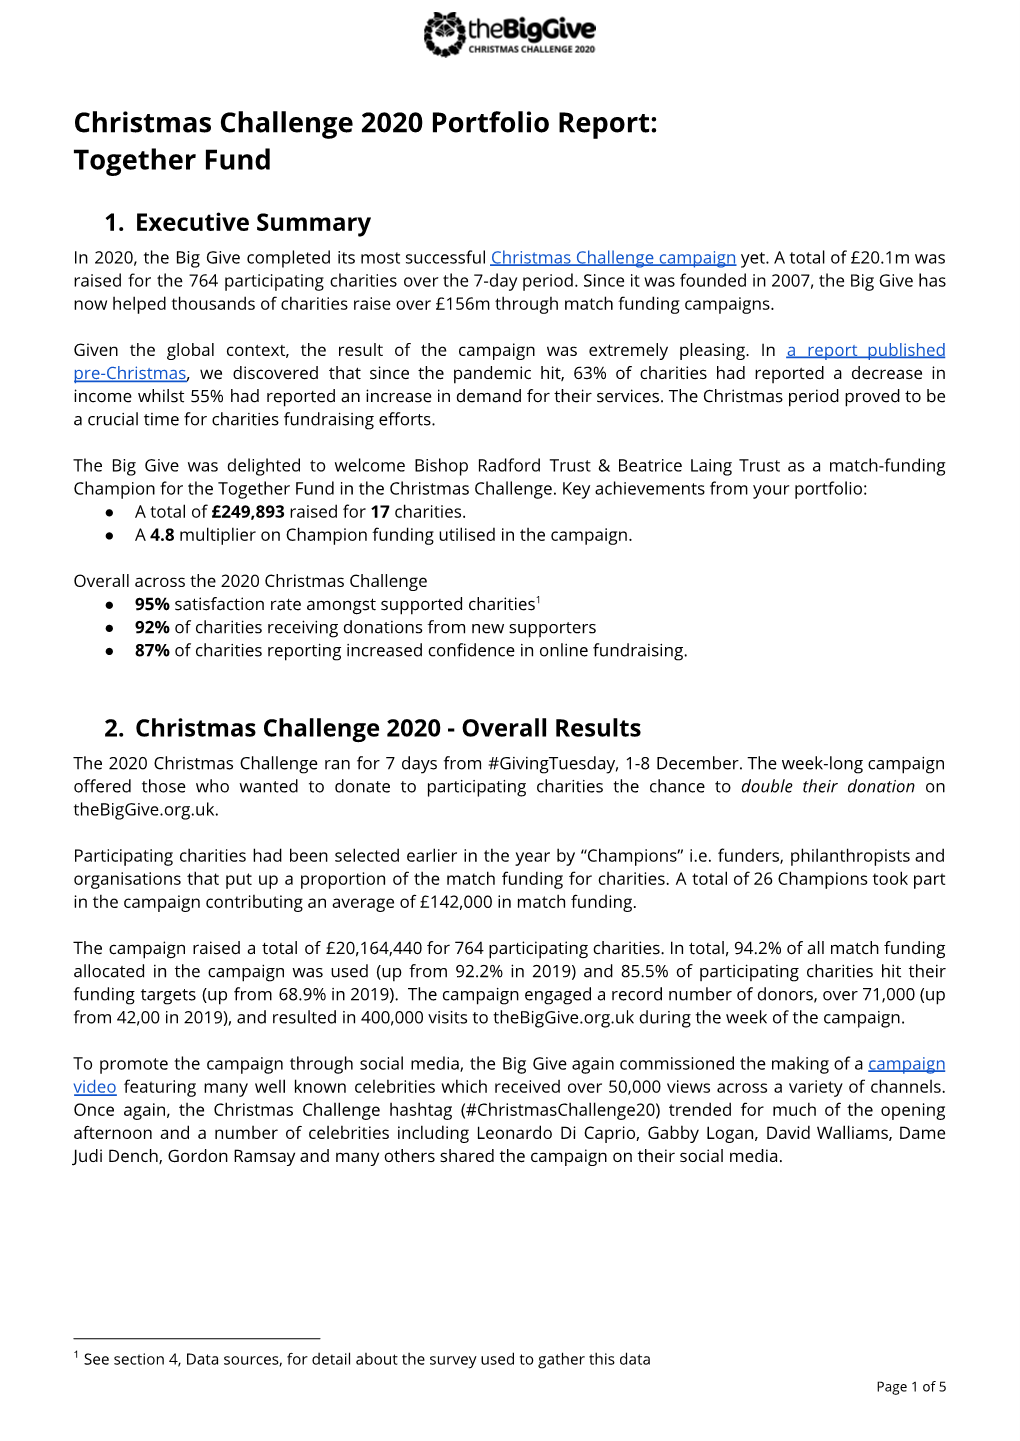 Christmas Challenge 2020 Portfolio Report TOGETHER FUND